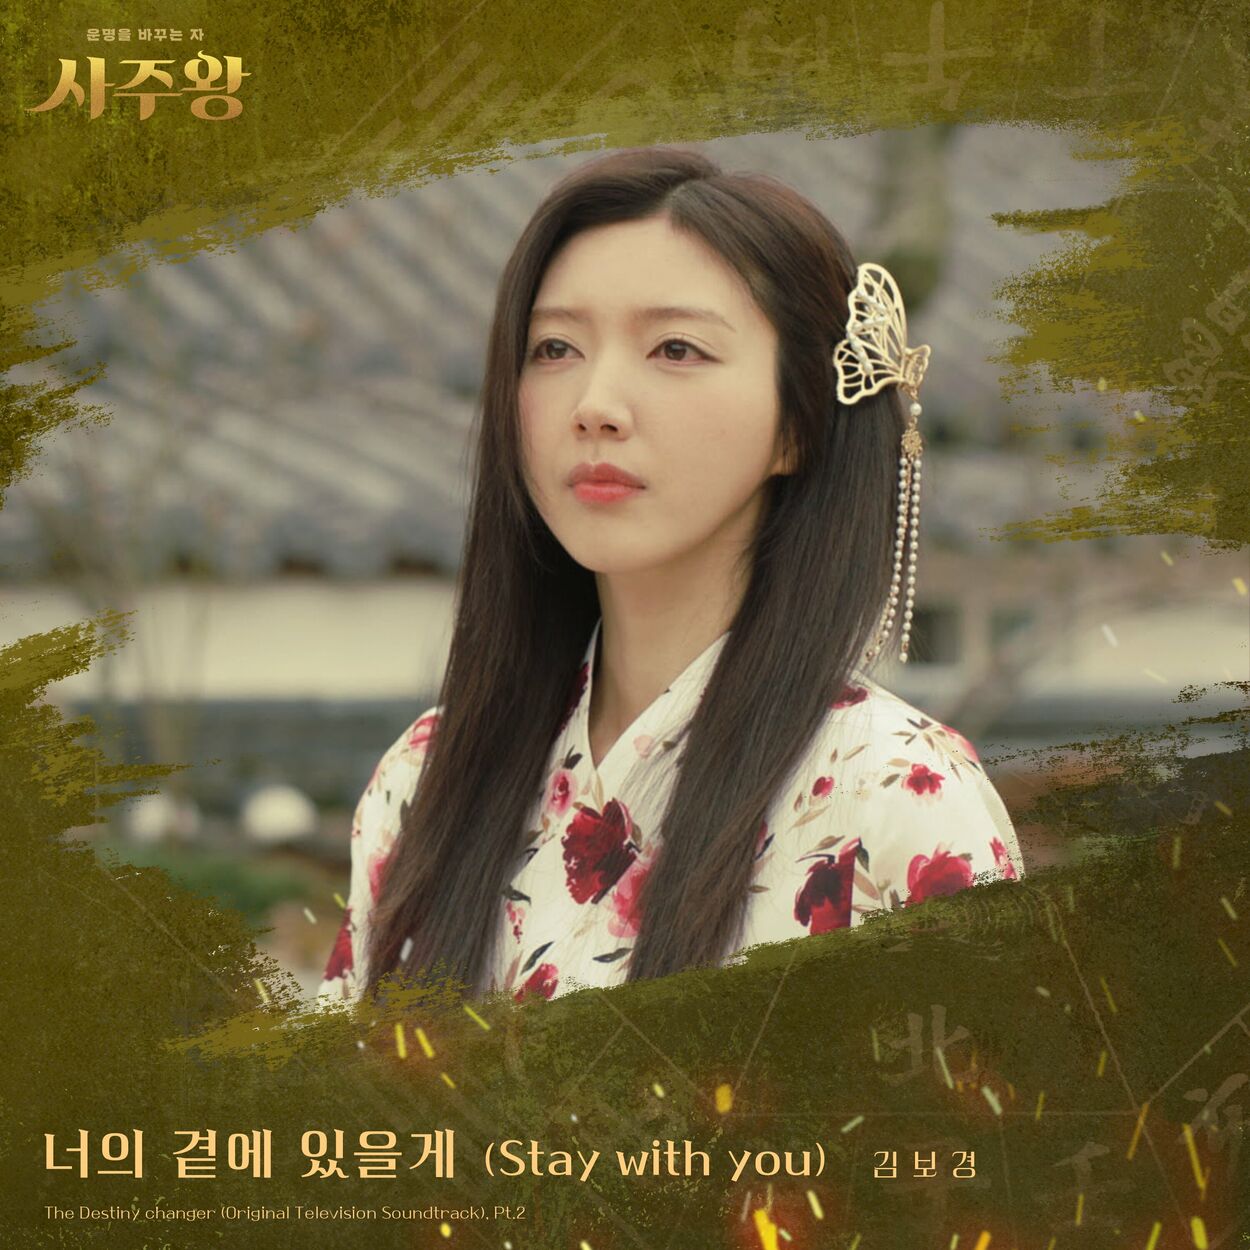 Kim Bo Kyung – The Destiny changer (Original Television Soundtrack, Pt. 2)